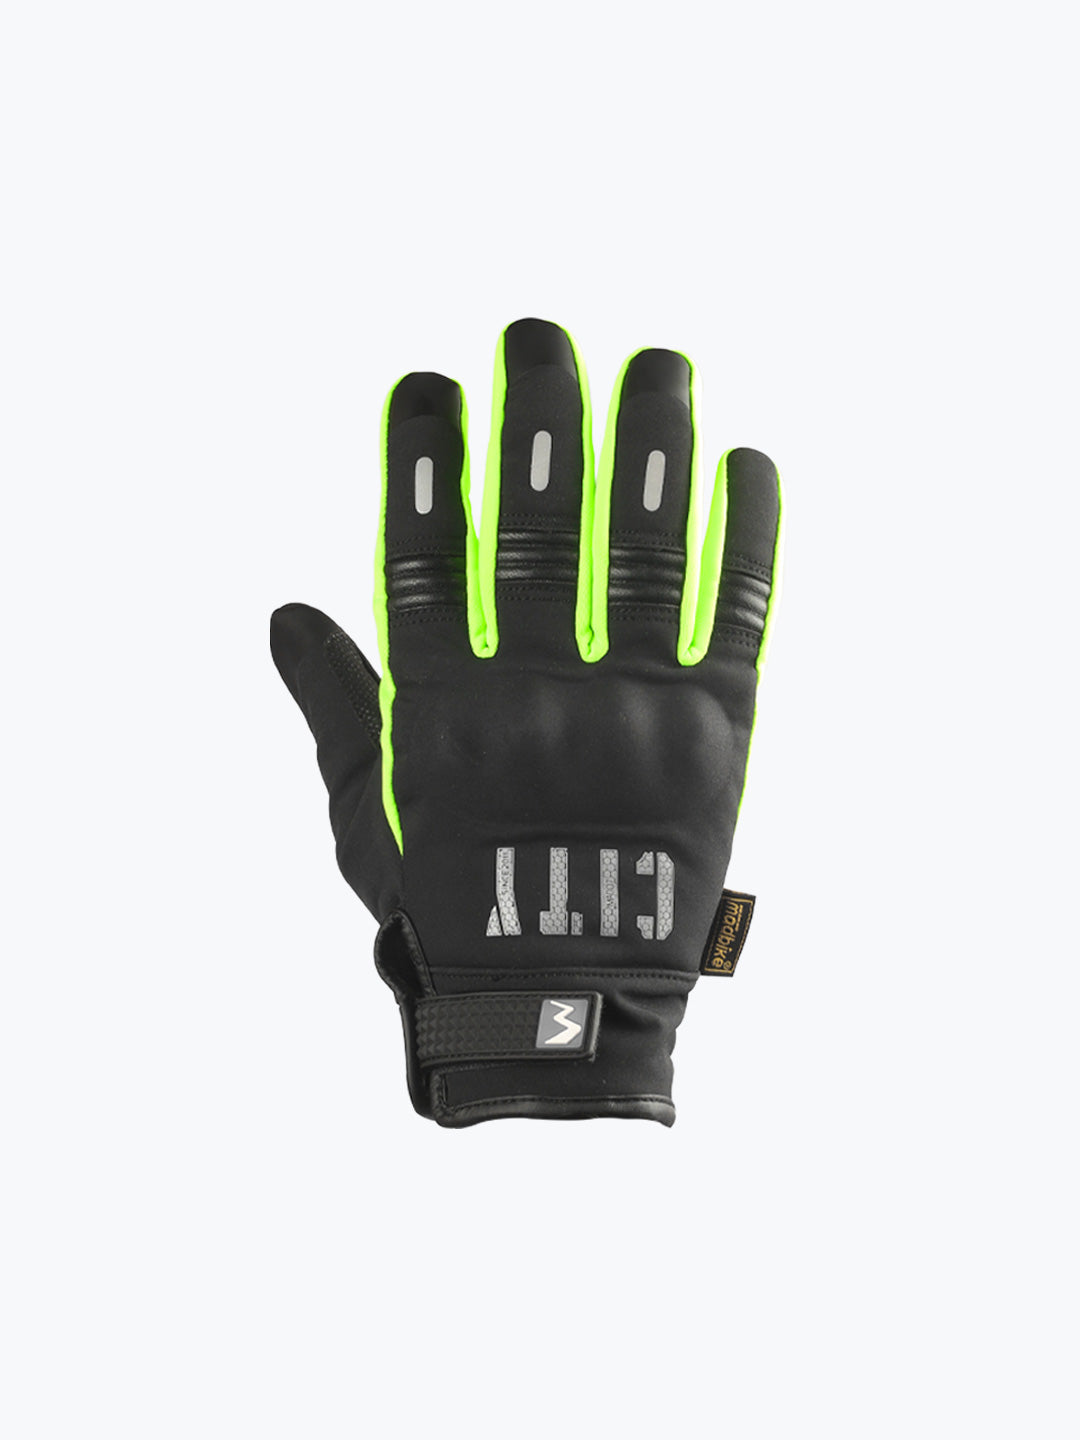 BSDDP City Gloves Touch Black & Green